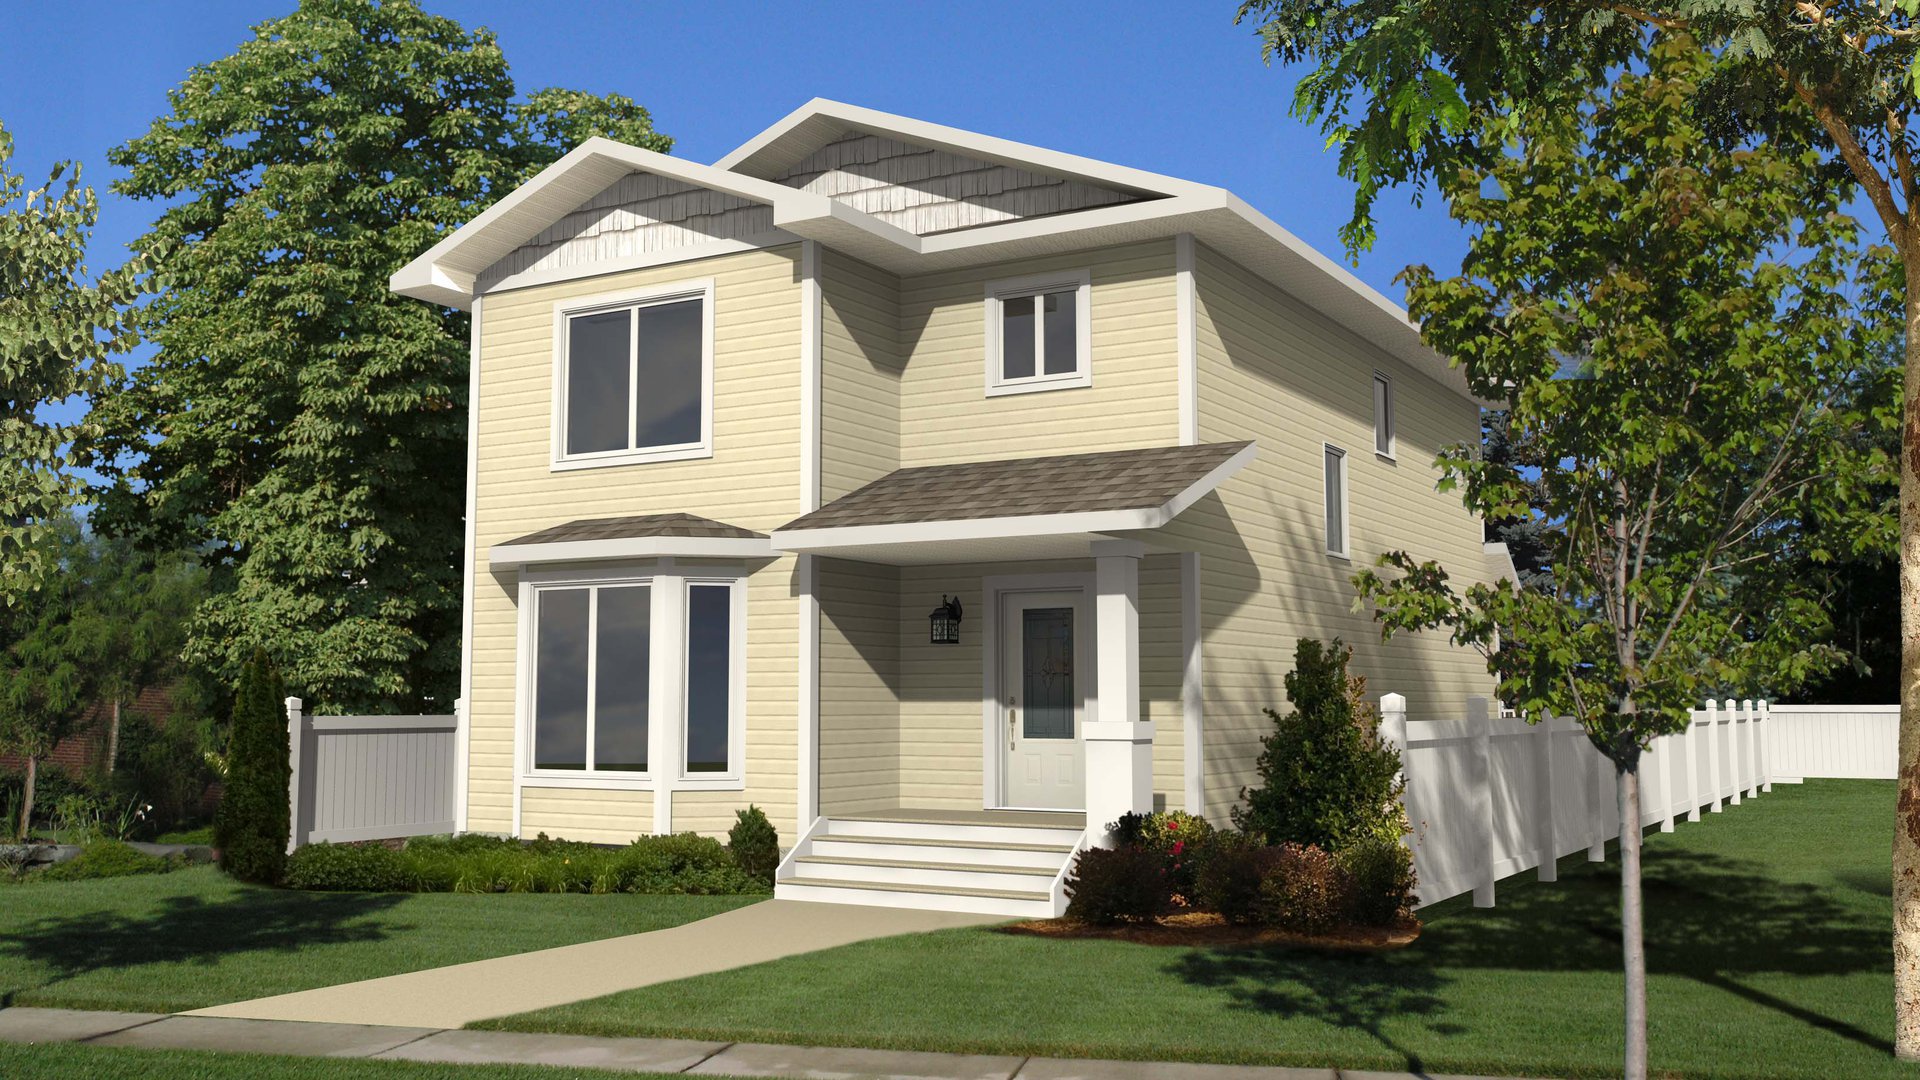 Inglewood prefab homes modular homes house plans nelson homes USA.jpg